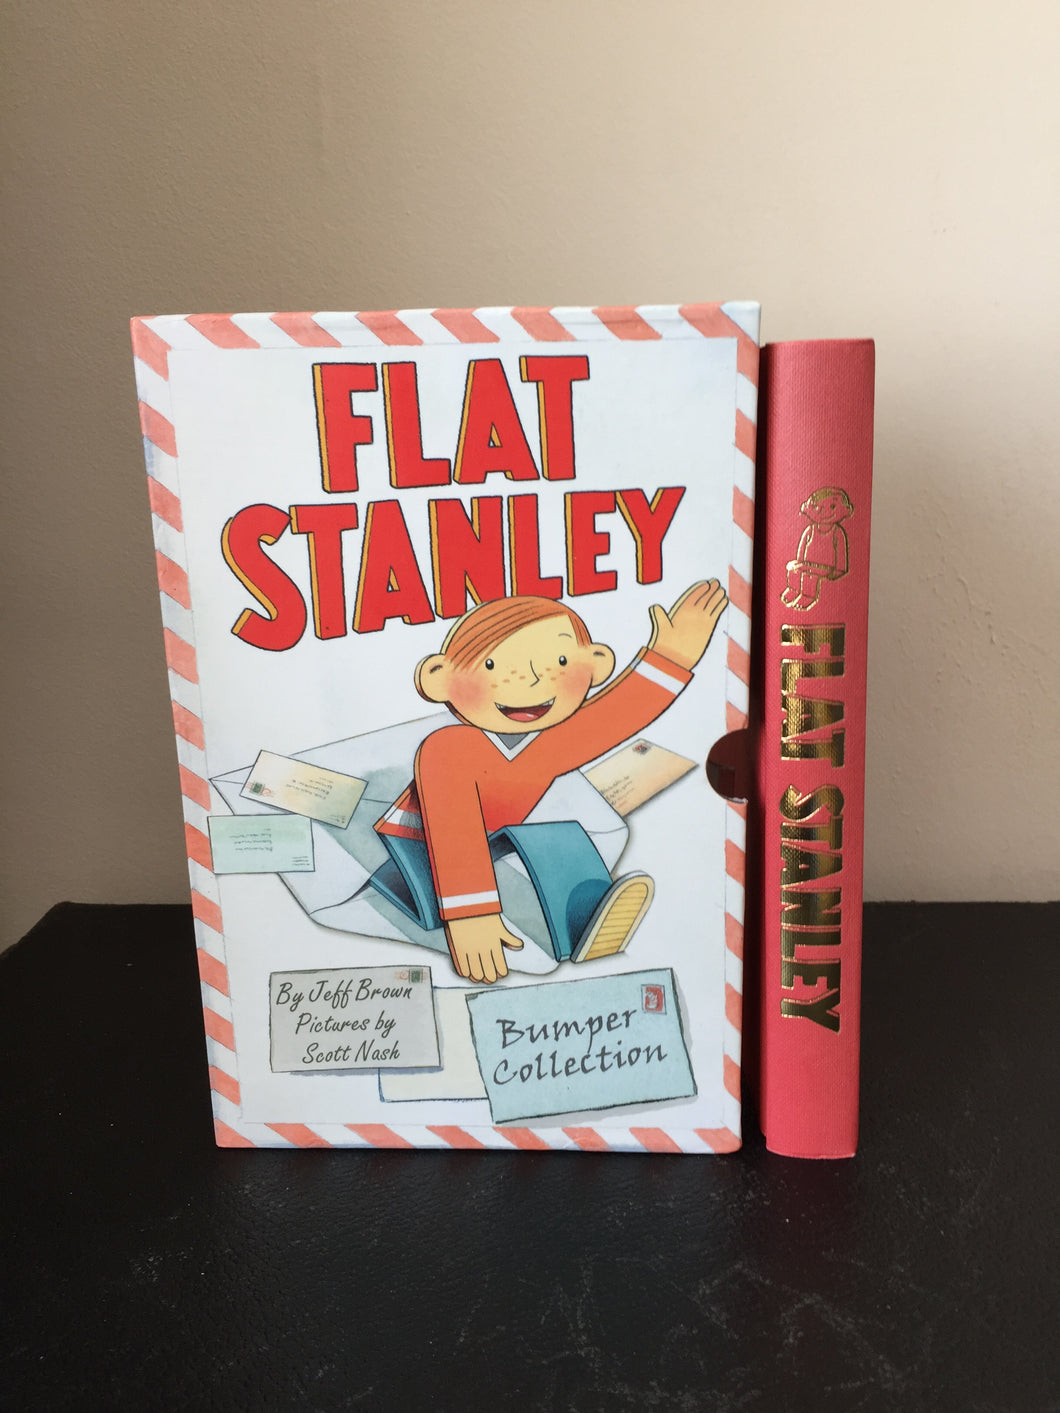 Flat Stanley - Bumper Collection in slip case